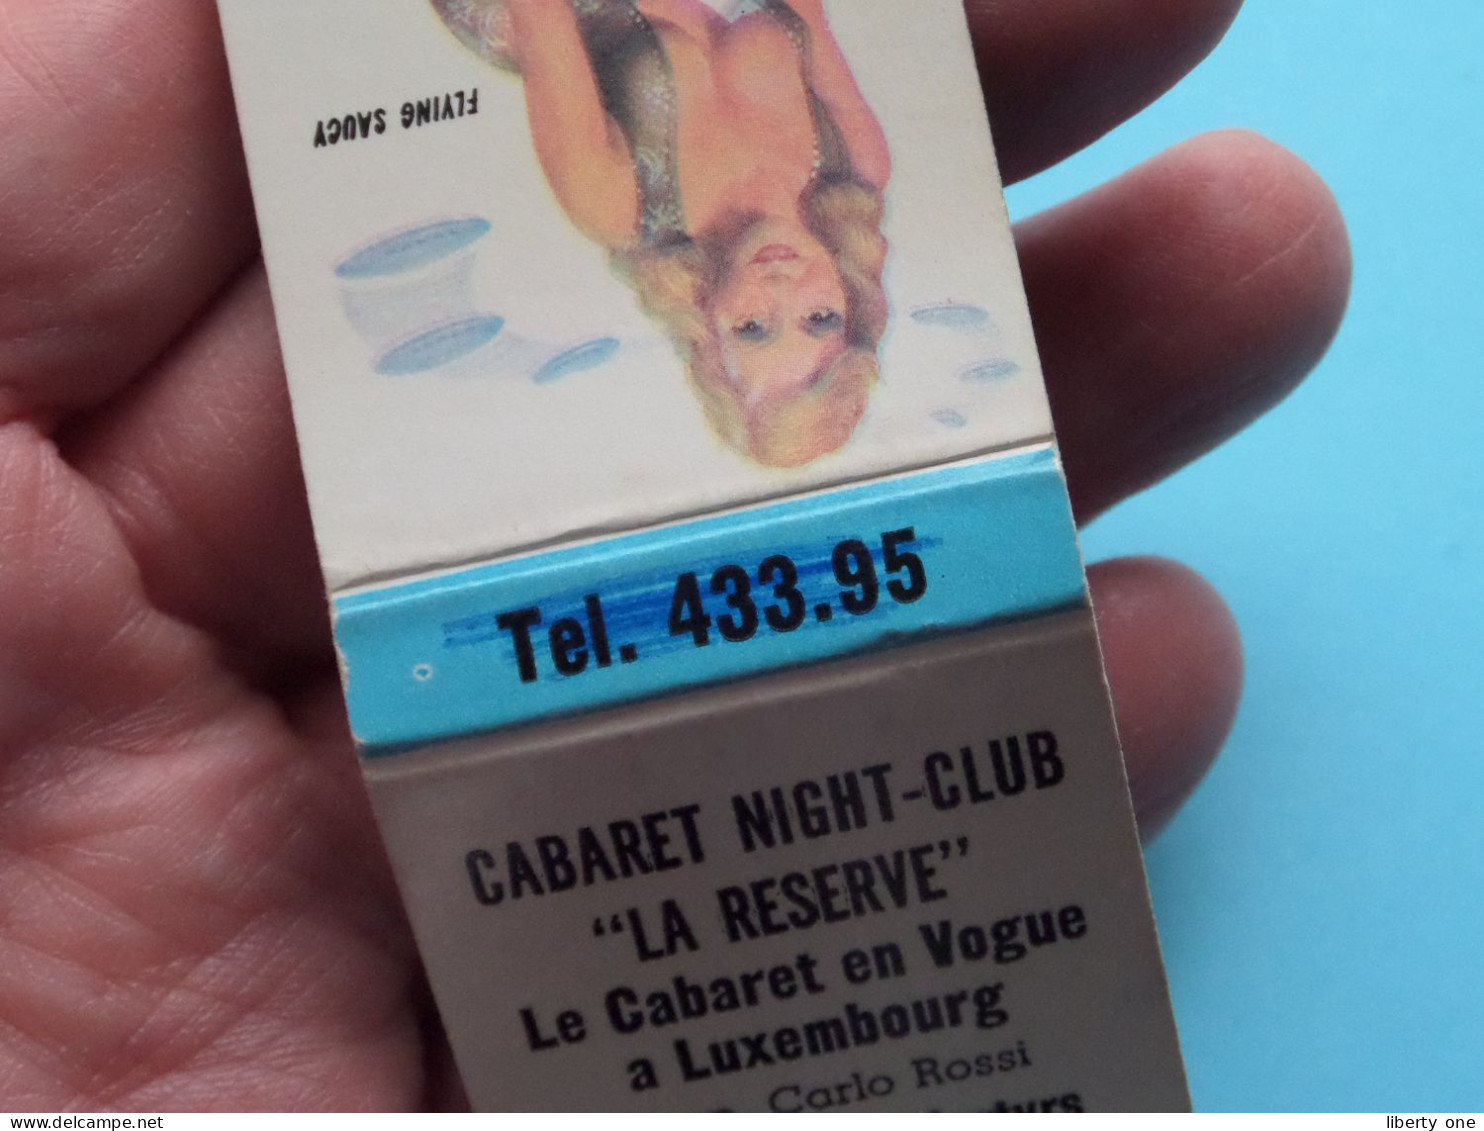 CABARET NIGHT-CLUB " LA RESERVE " à LUXEMBOURG > Flying Saucy ( Prop. Carlo Rossi ) Regal Batch C° USA ! - Werbeartikel